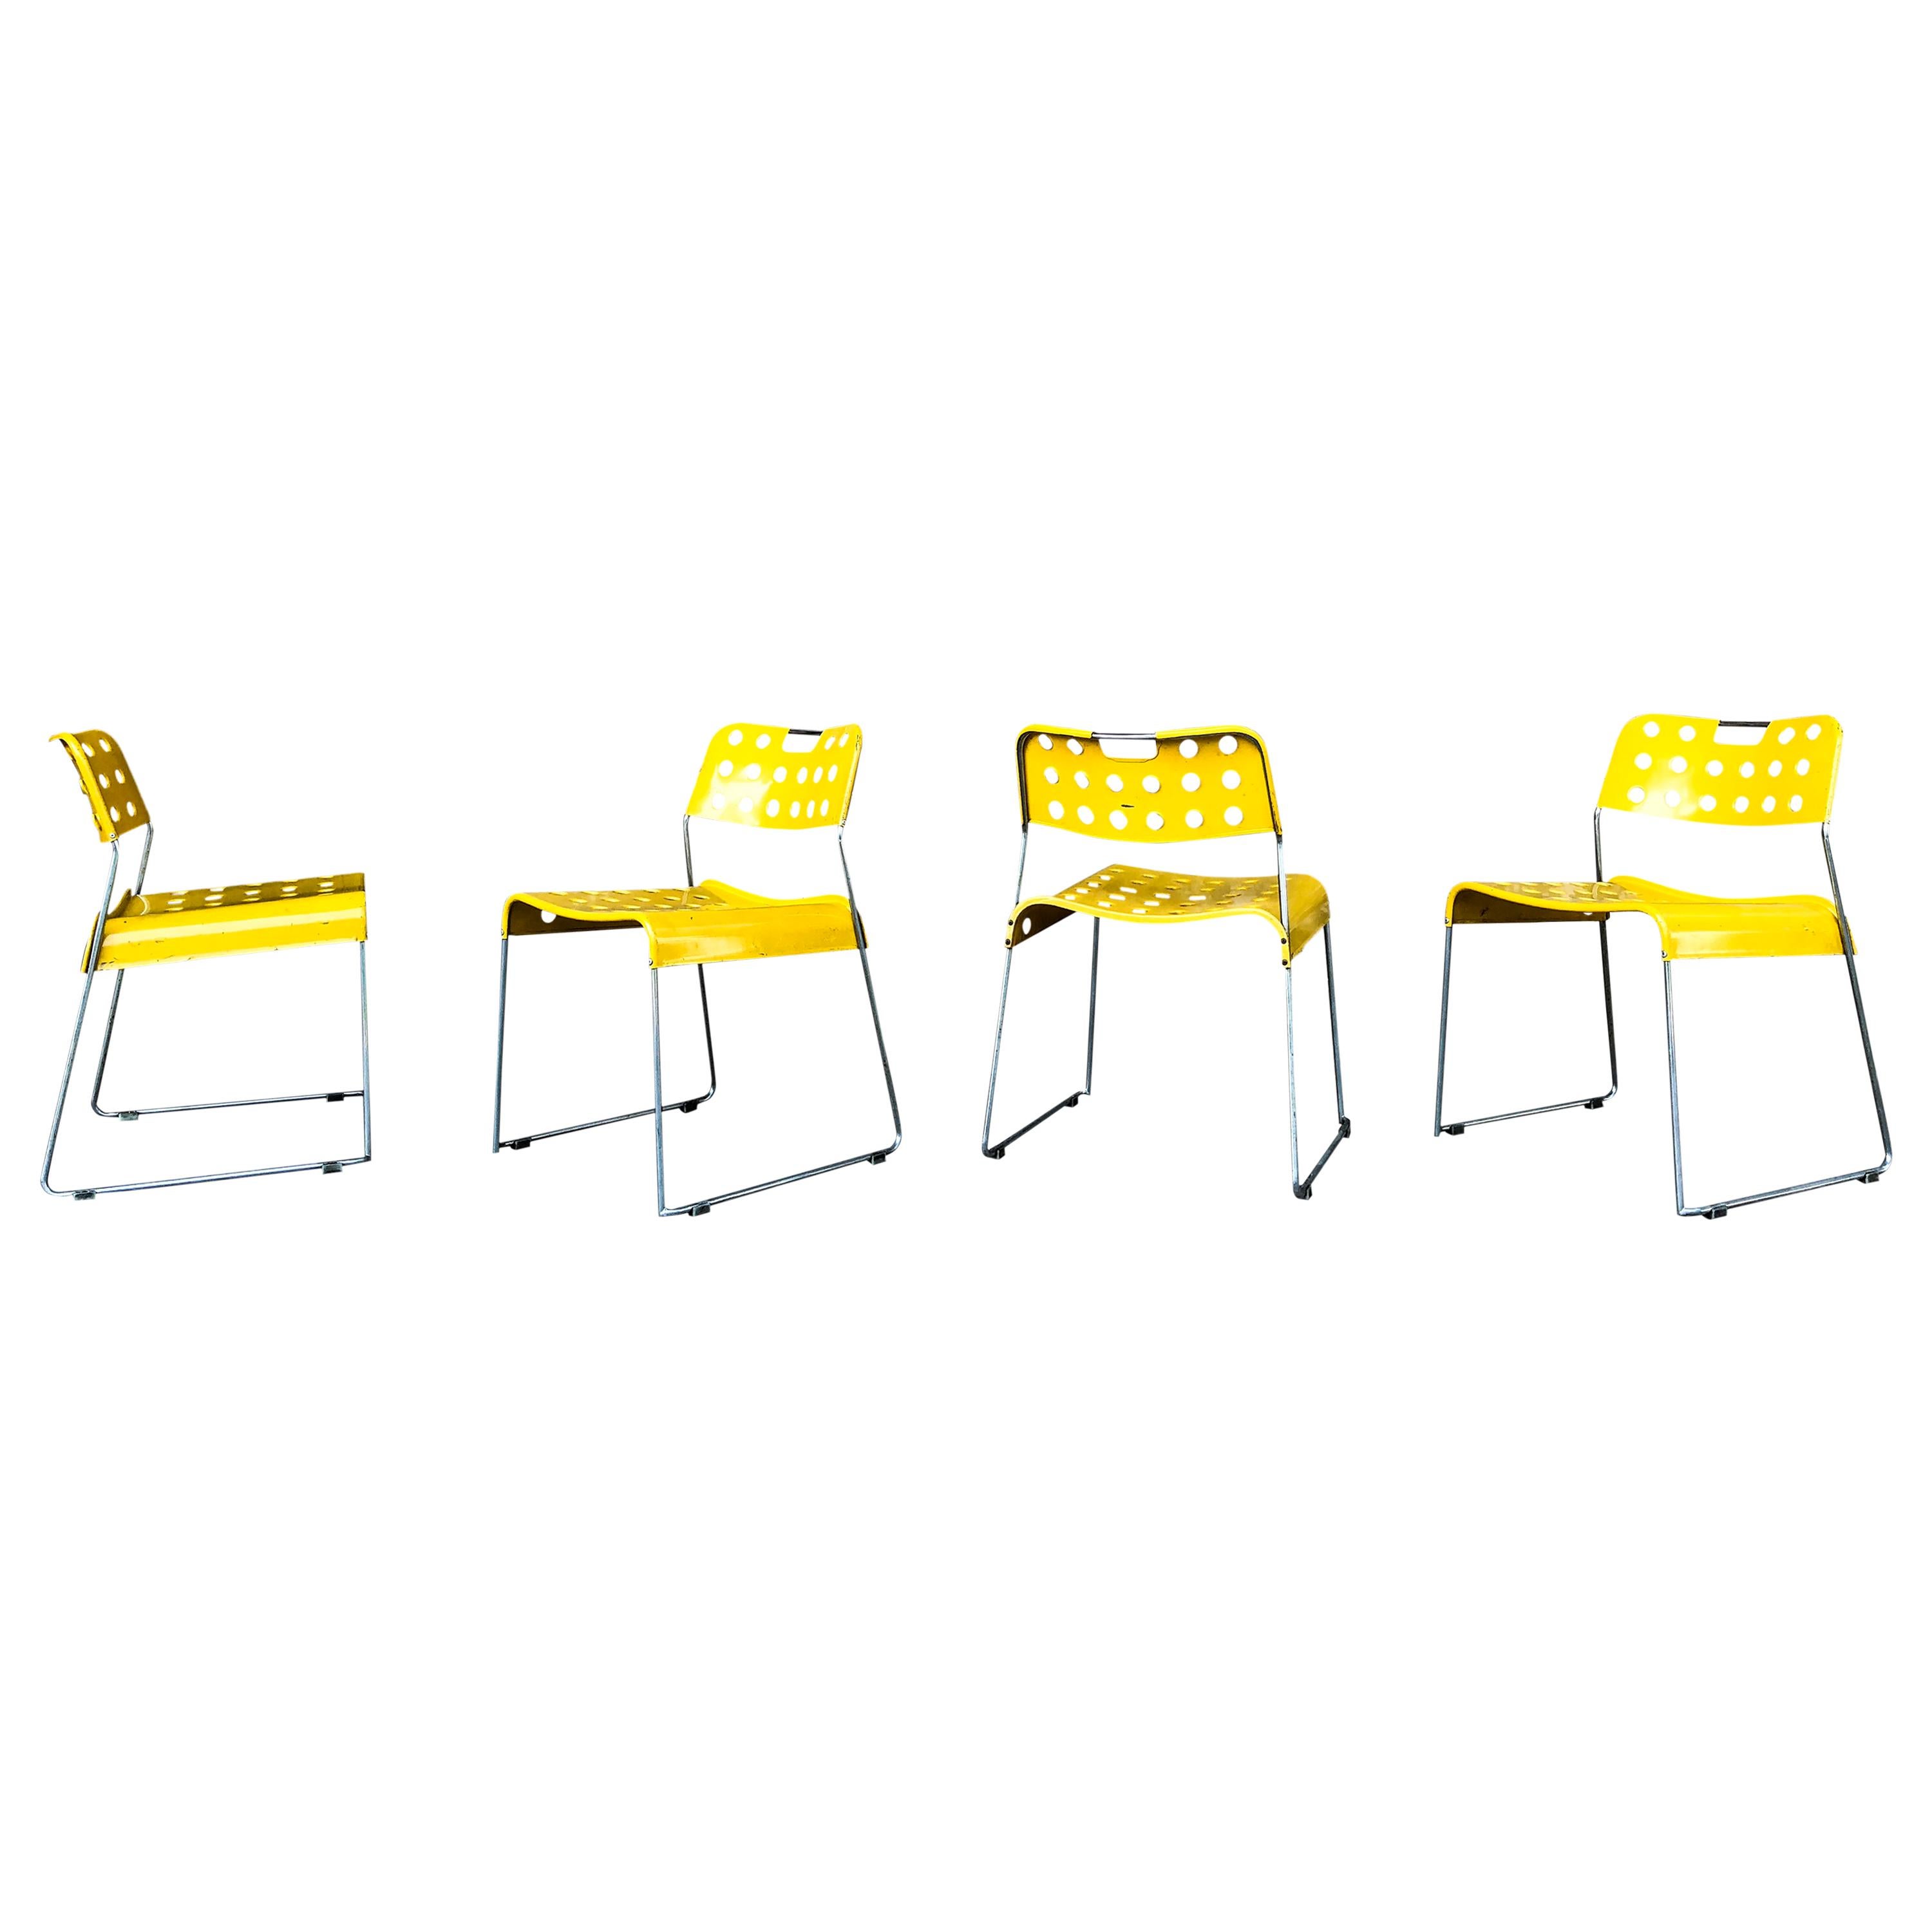 Italian Rodney Kinsman Space Age Yellow Omstak Chair for Bieffeplast, 1971, Set of 6 For Sale